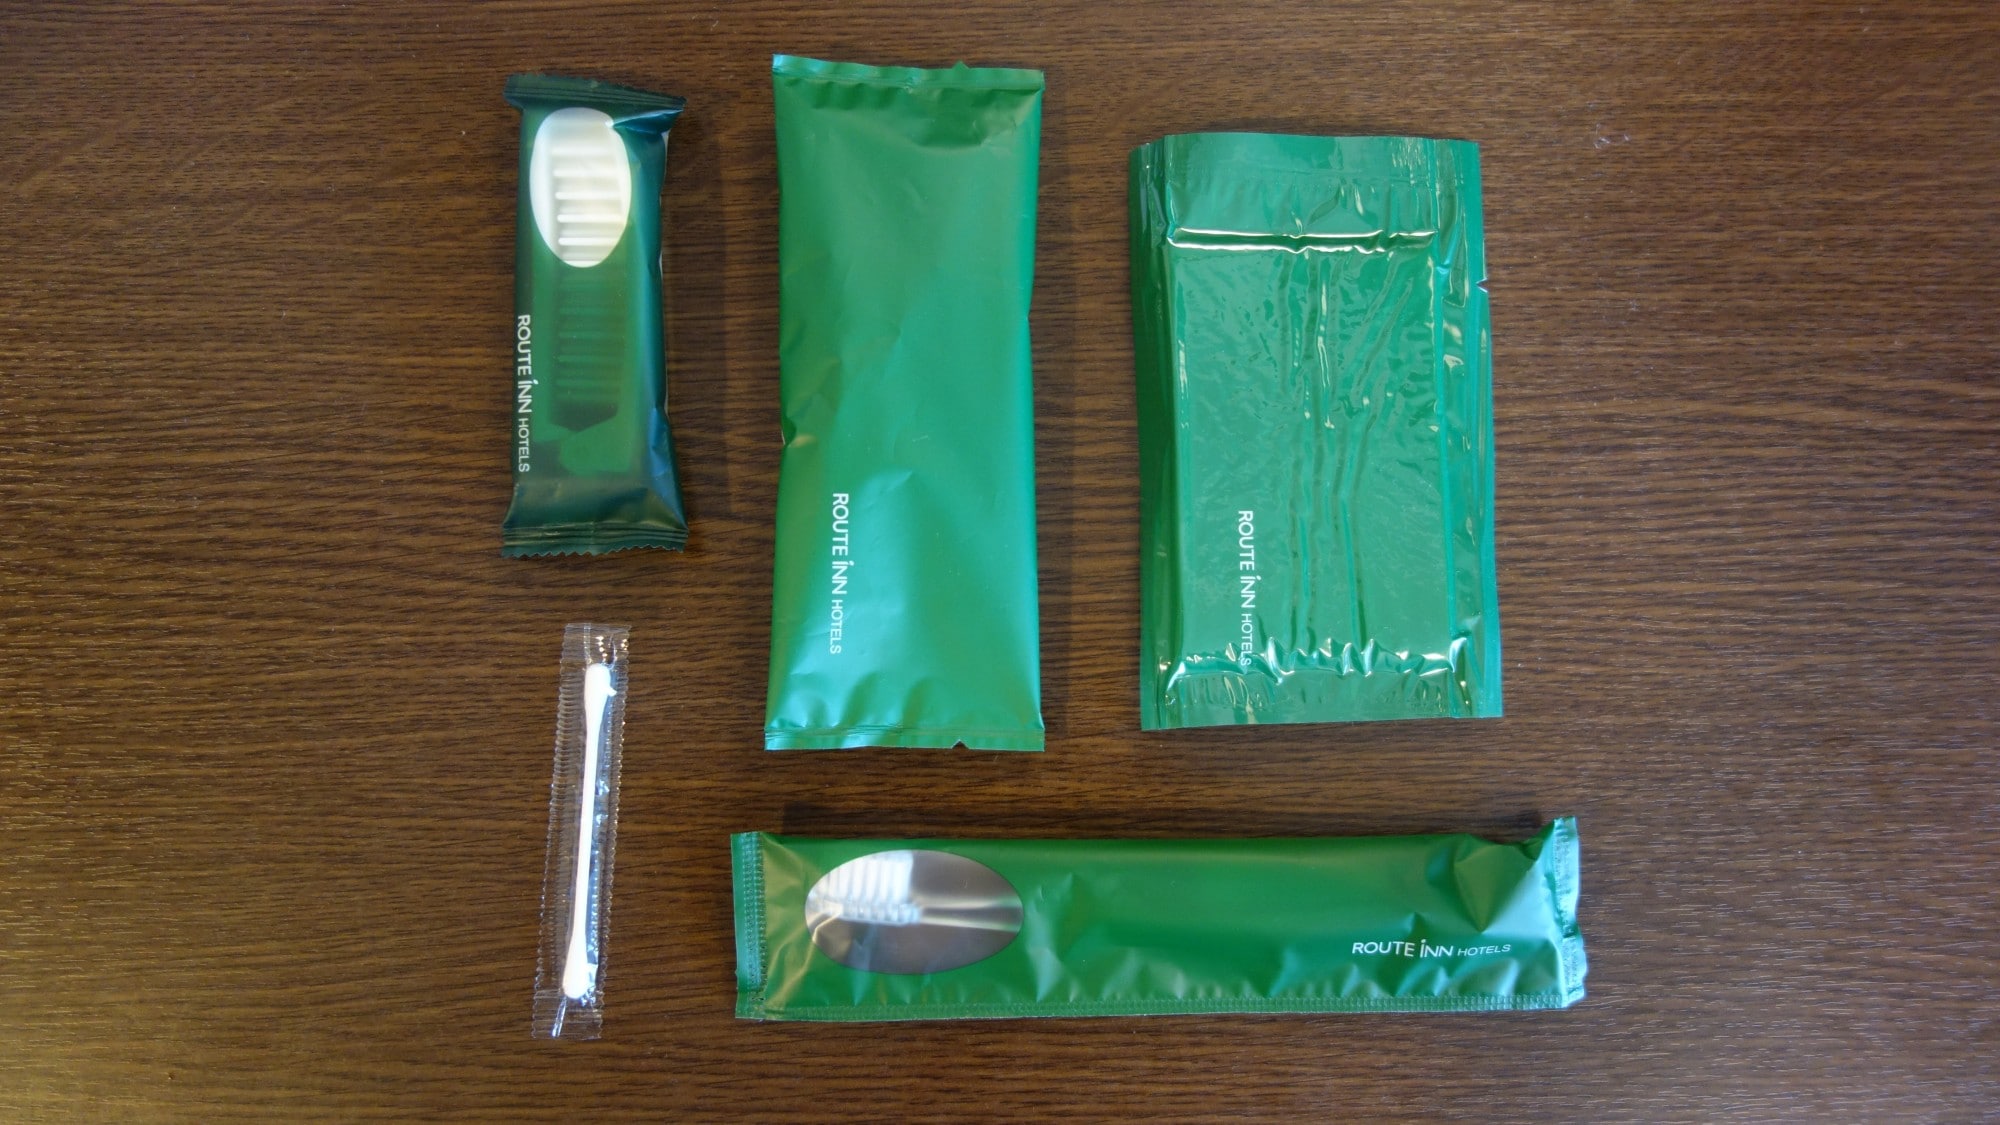 Standard room amenities (toothbrush, leather, brush, body sponge, cotton swab)